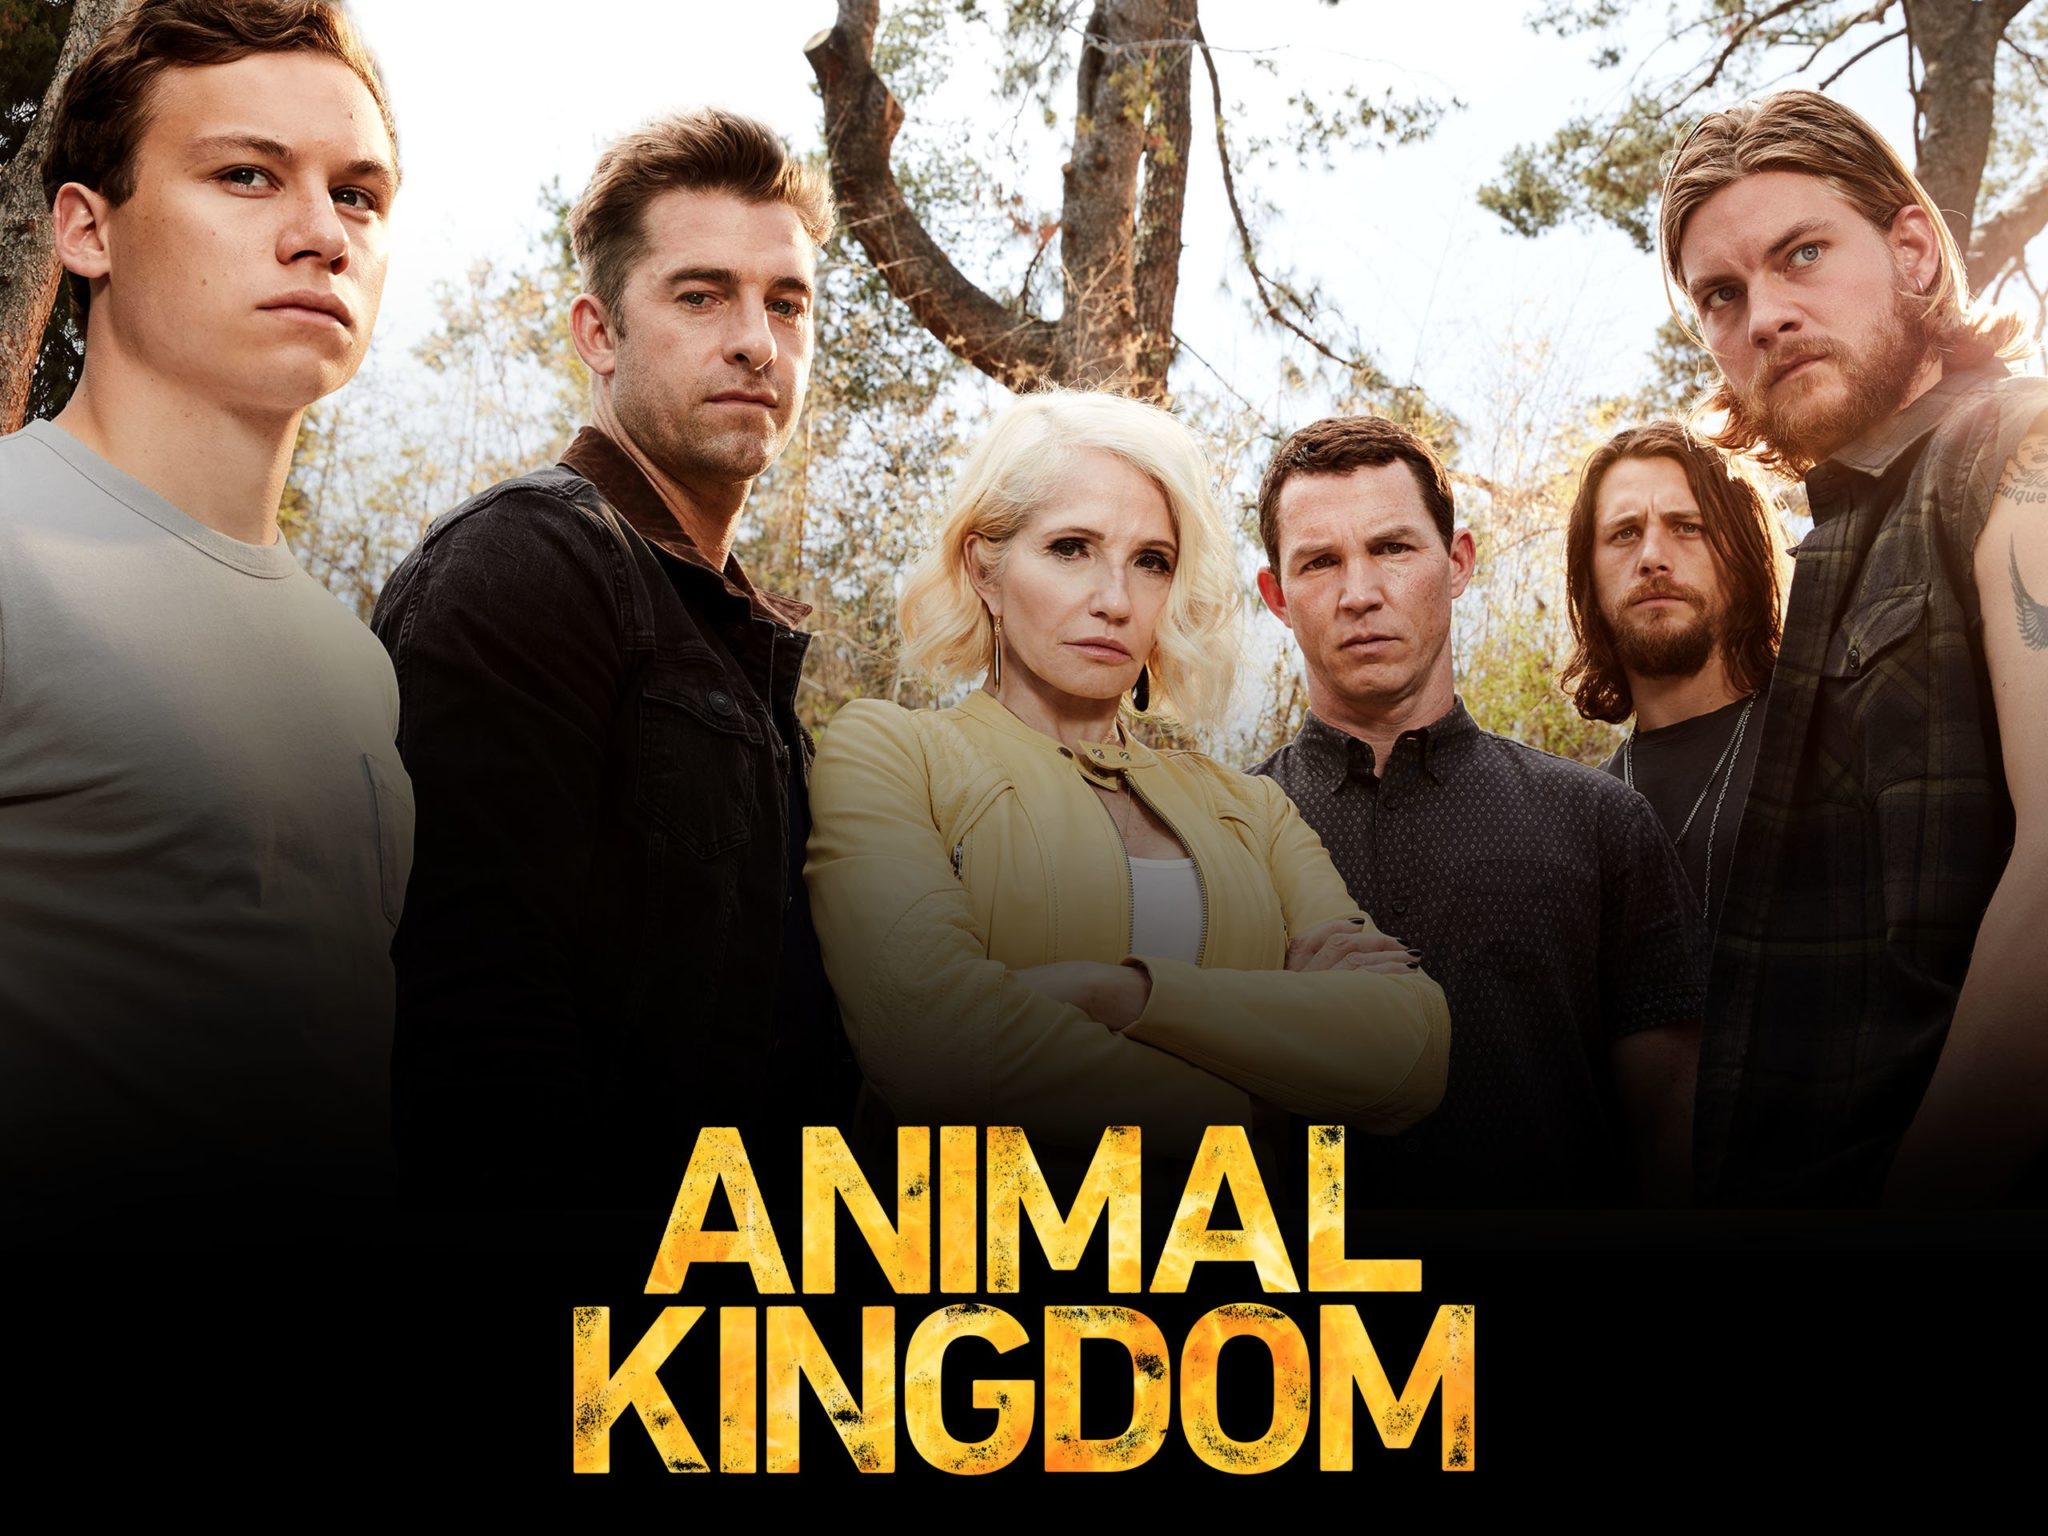 "Animal Kingdom" Season 1 To 5 Available On Netflix? | Where to Watch